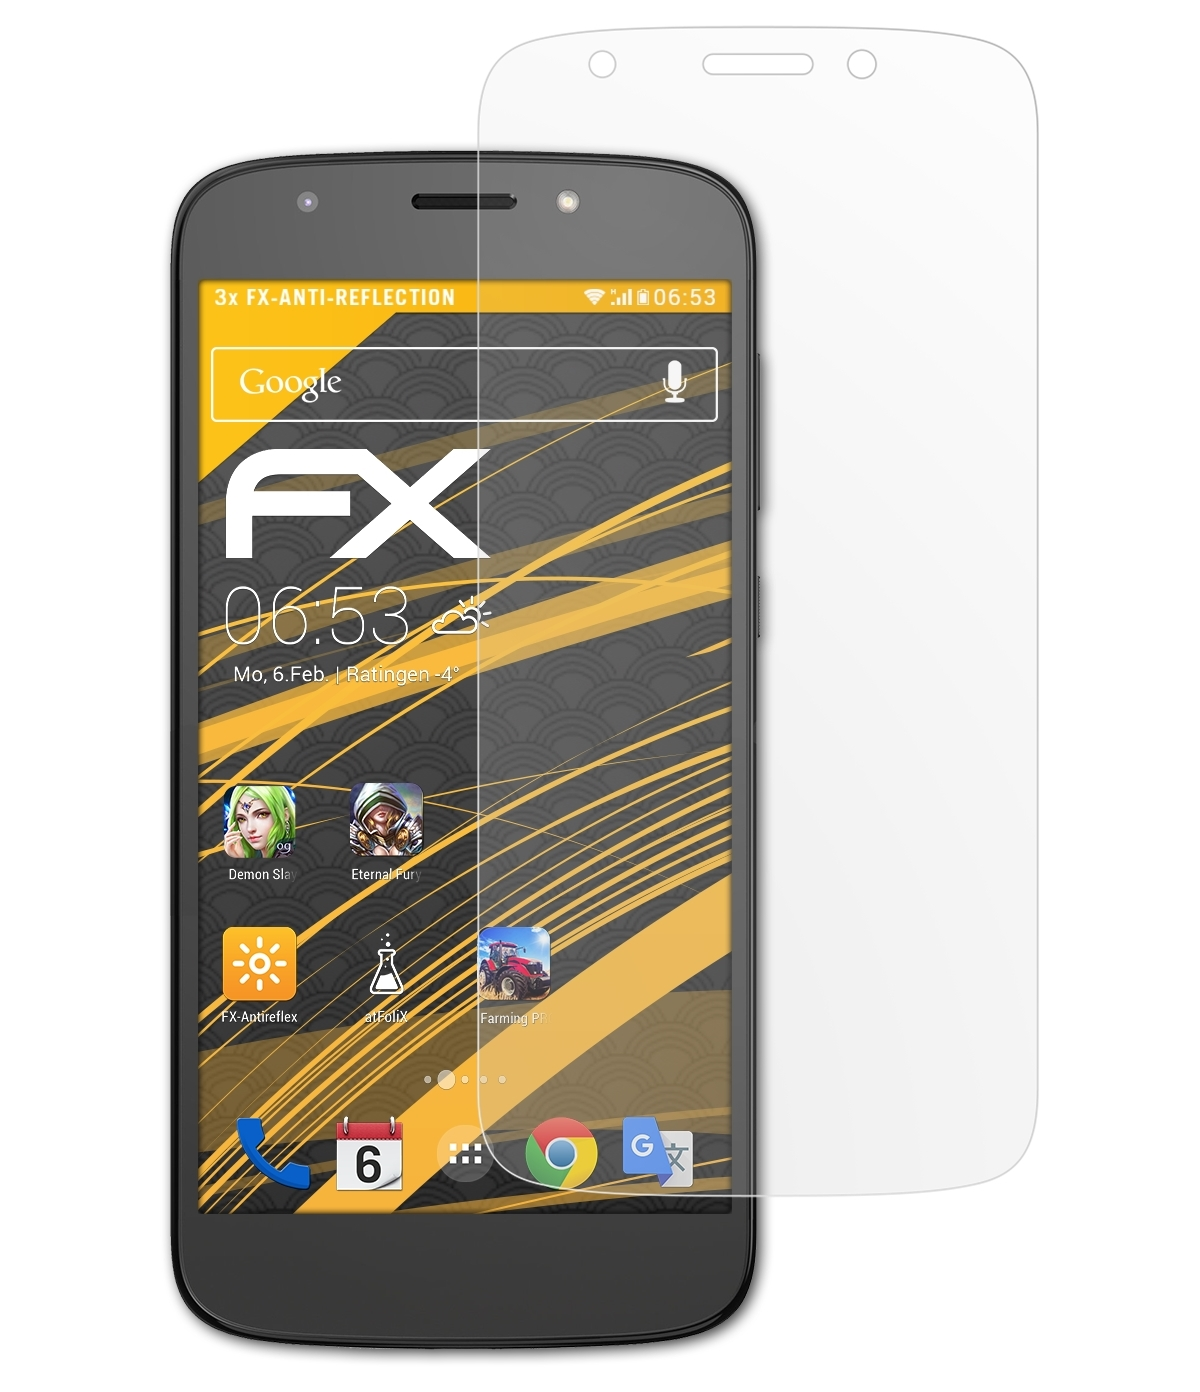 FX-Antireflex 3x Displayschutz(für E5 ATFOLIX Moto Lenovo Motorola Play)